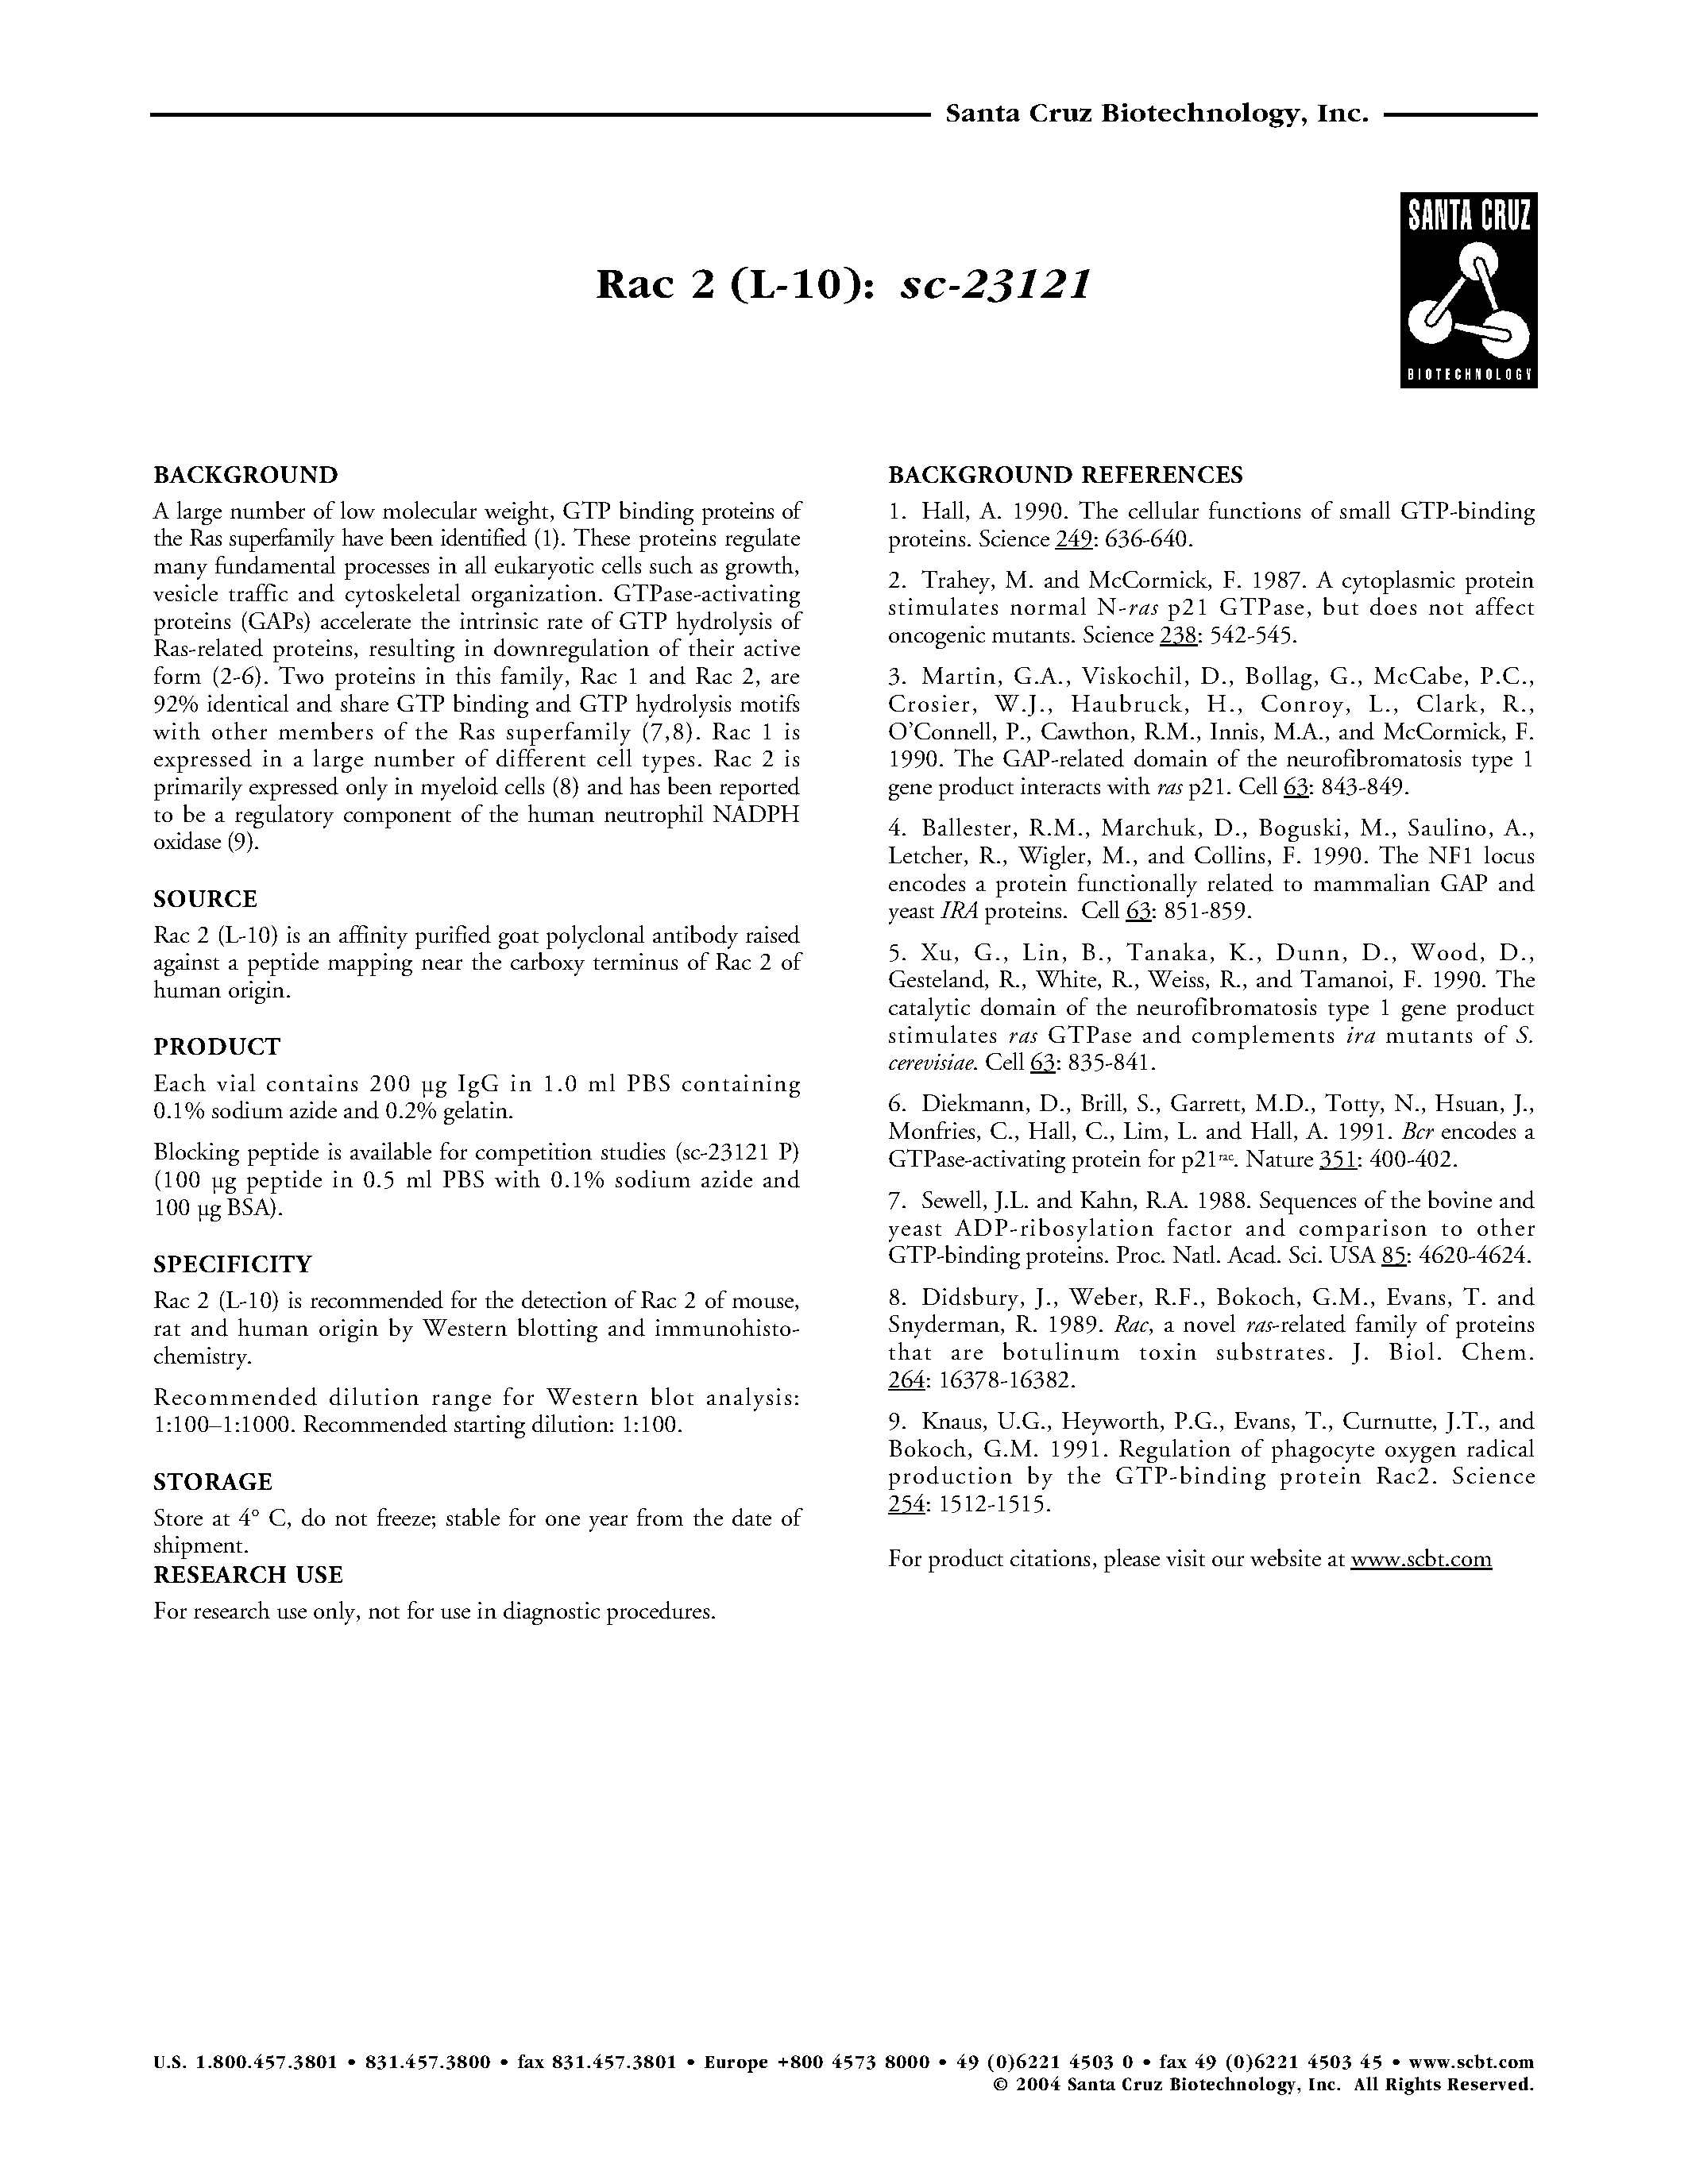 Datasheet SC-23121 - Rac 2 (L-10): sc-23121 page 1